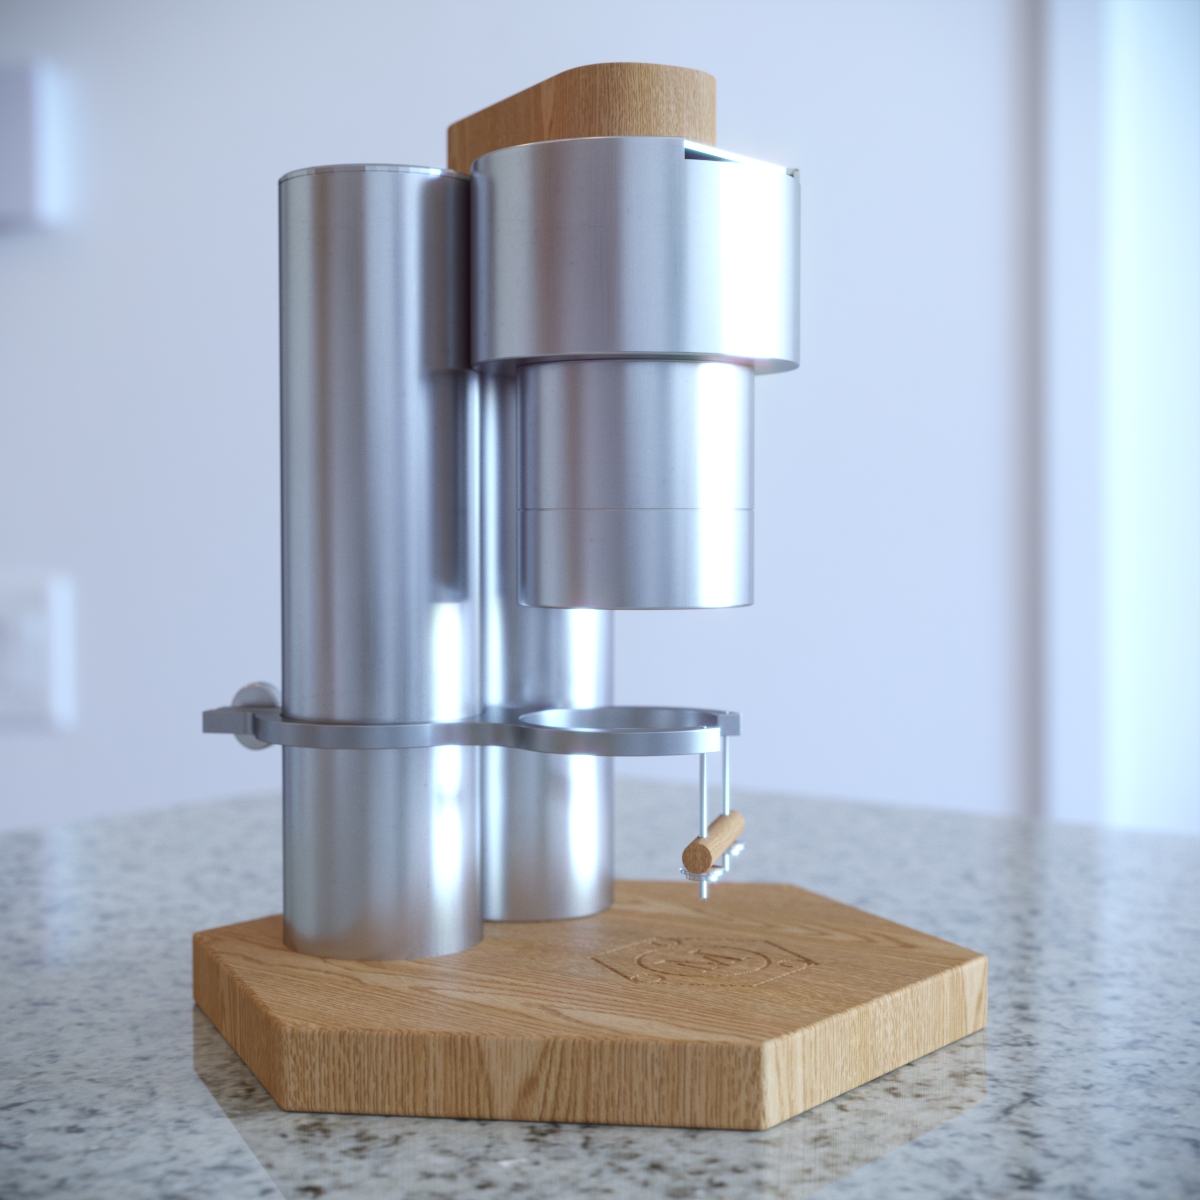 Mola-e coffee grinder